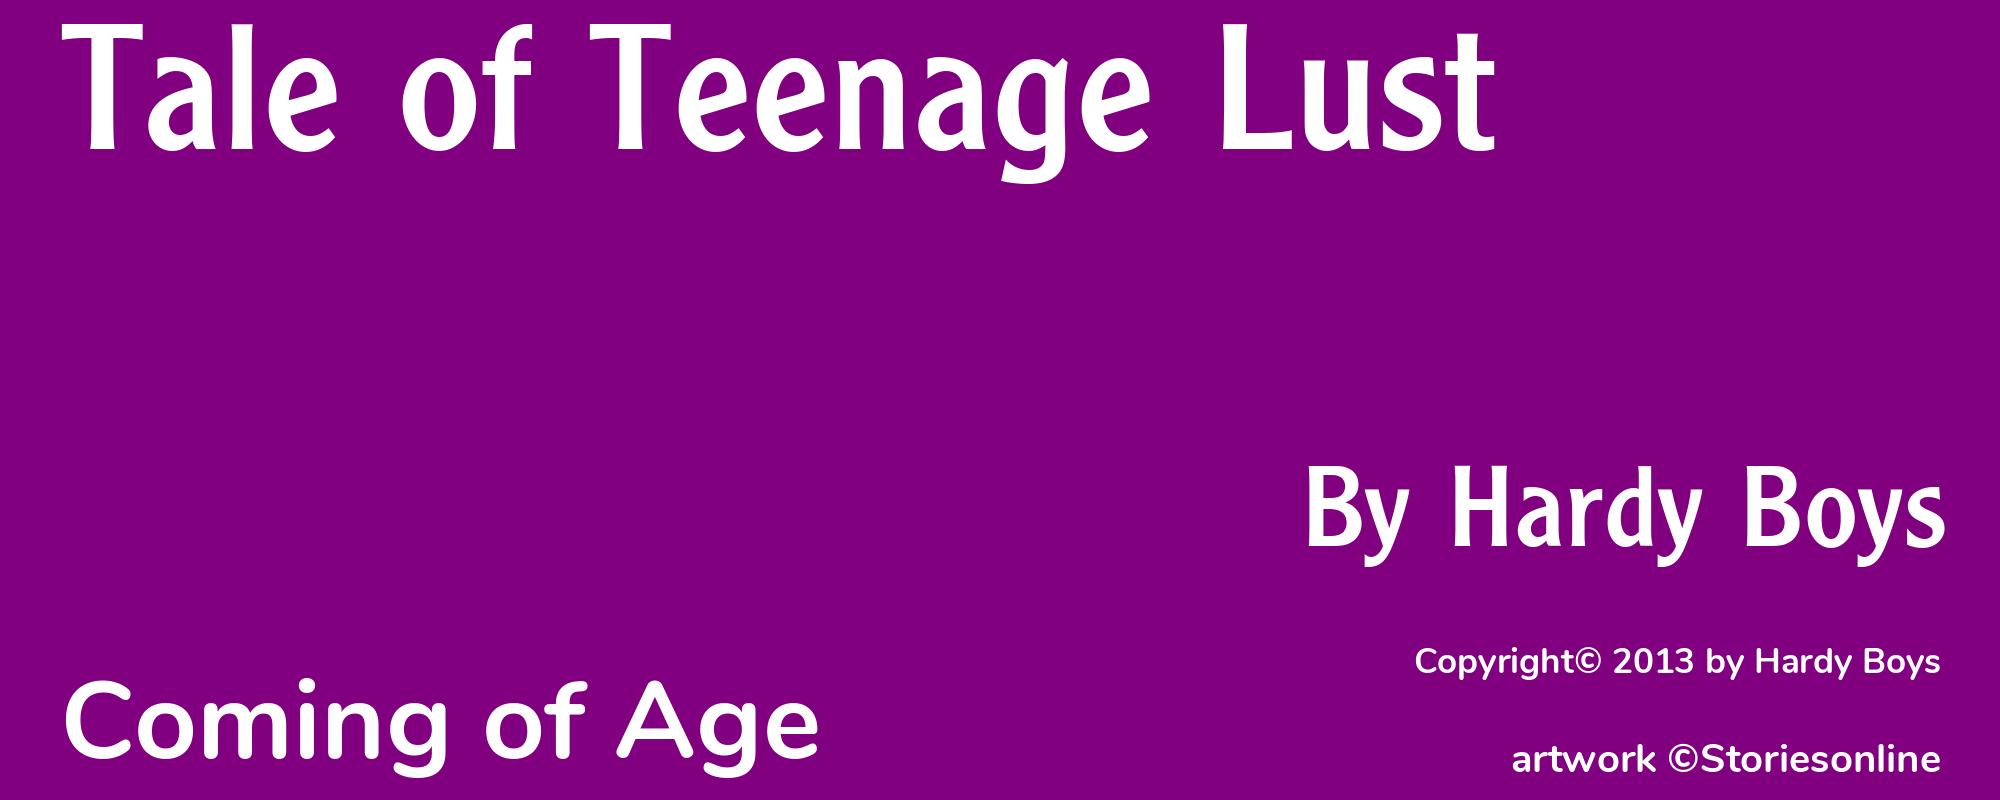 Tale of Teenage Lust - Cover